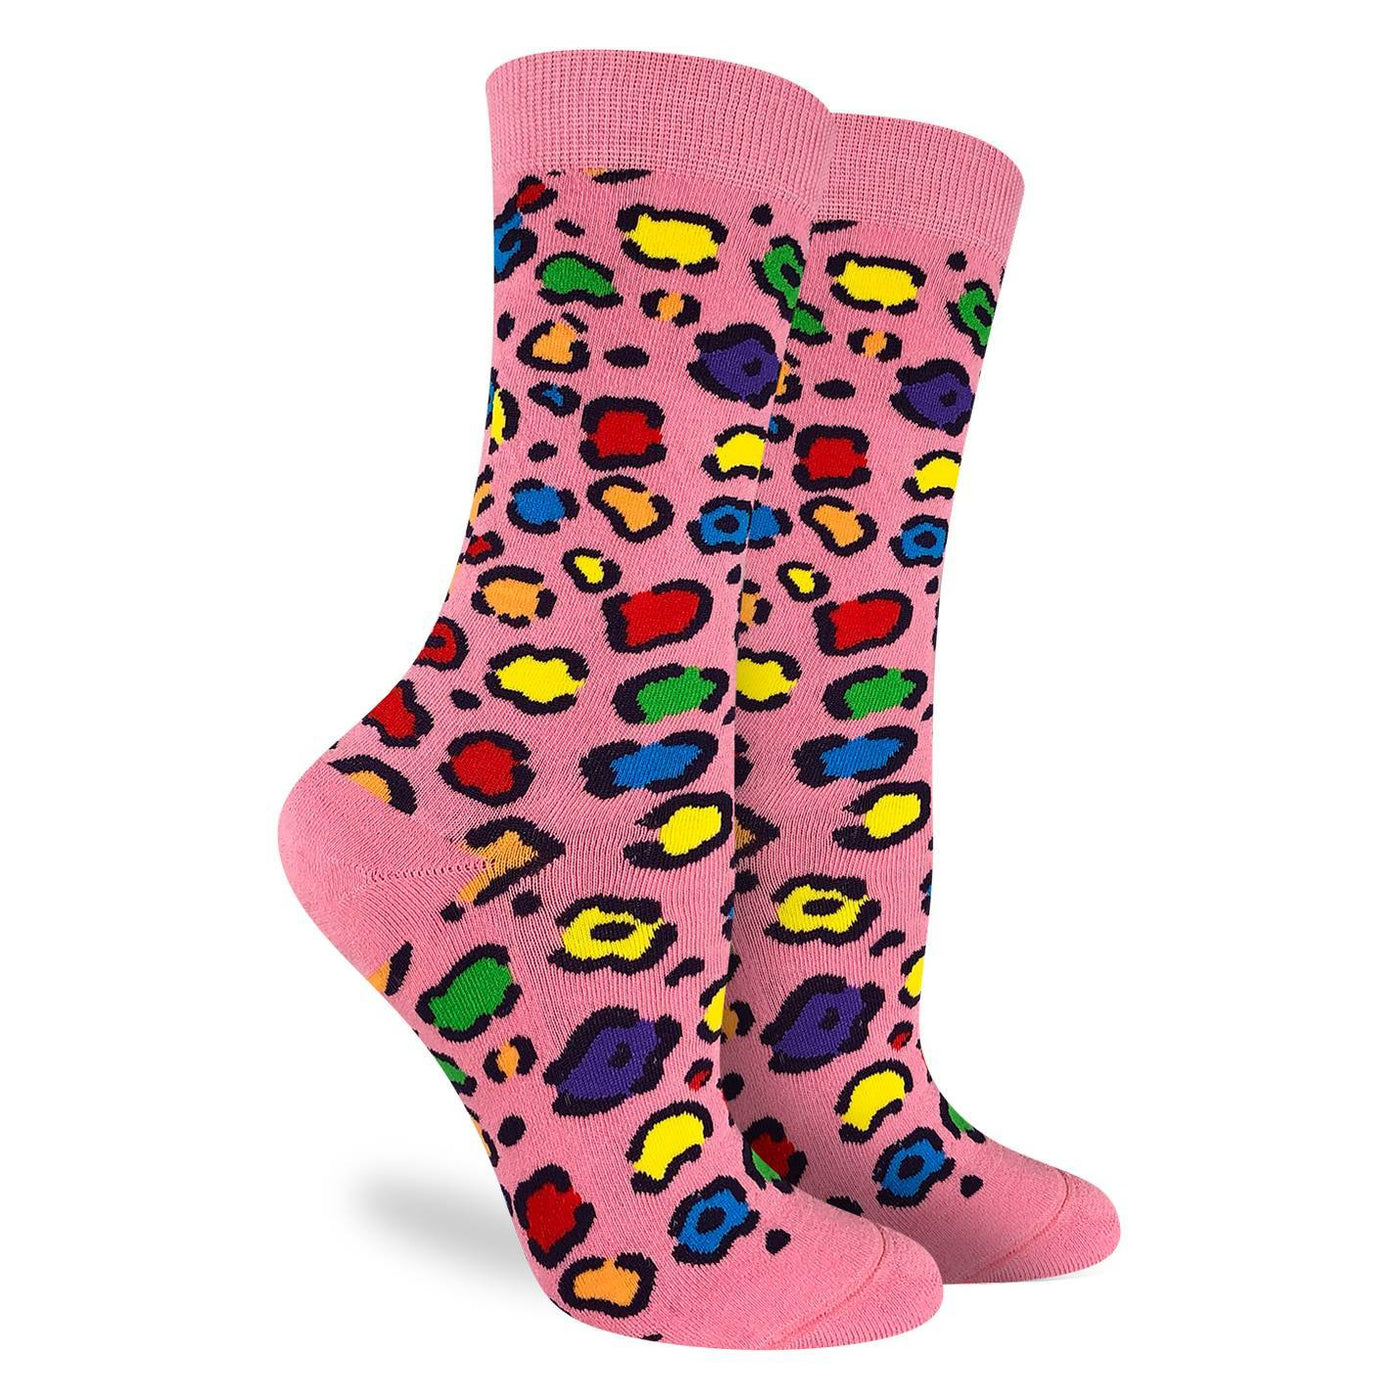 Leopard Rainbow Print Socks" Crew Socks by Good Luck Sock - Medium - SALE